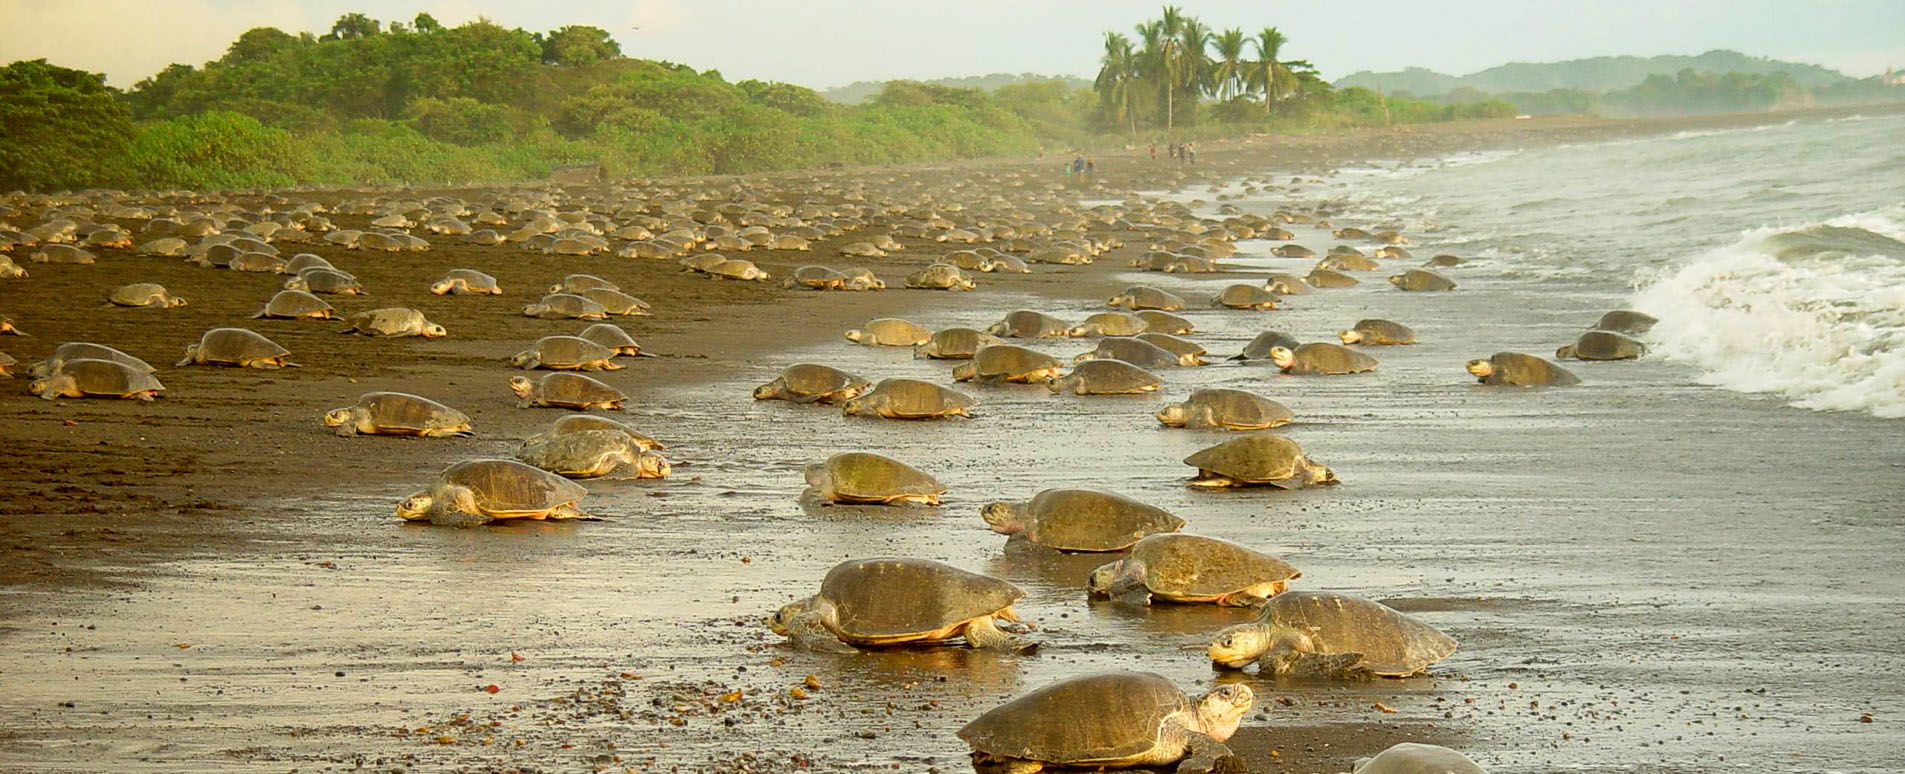 costa rica wildlife turtles